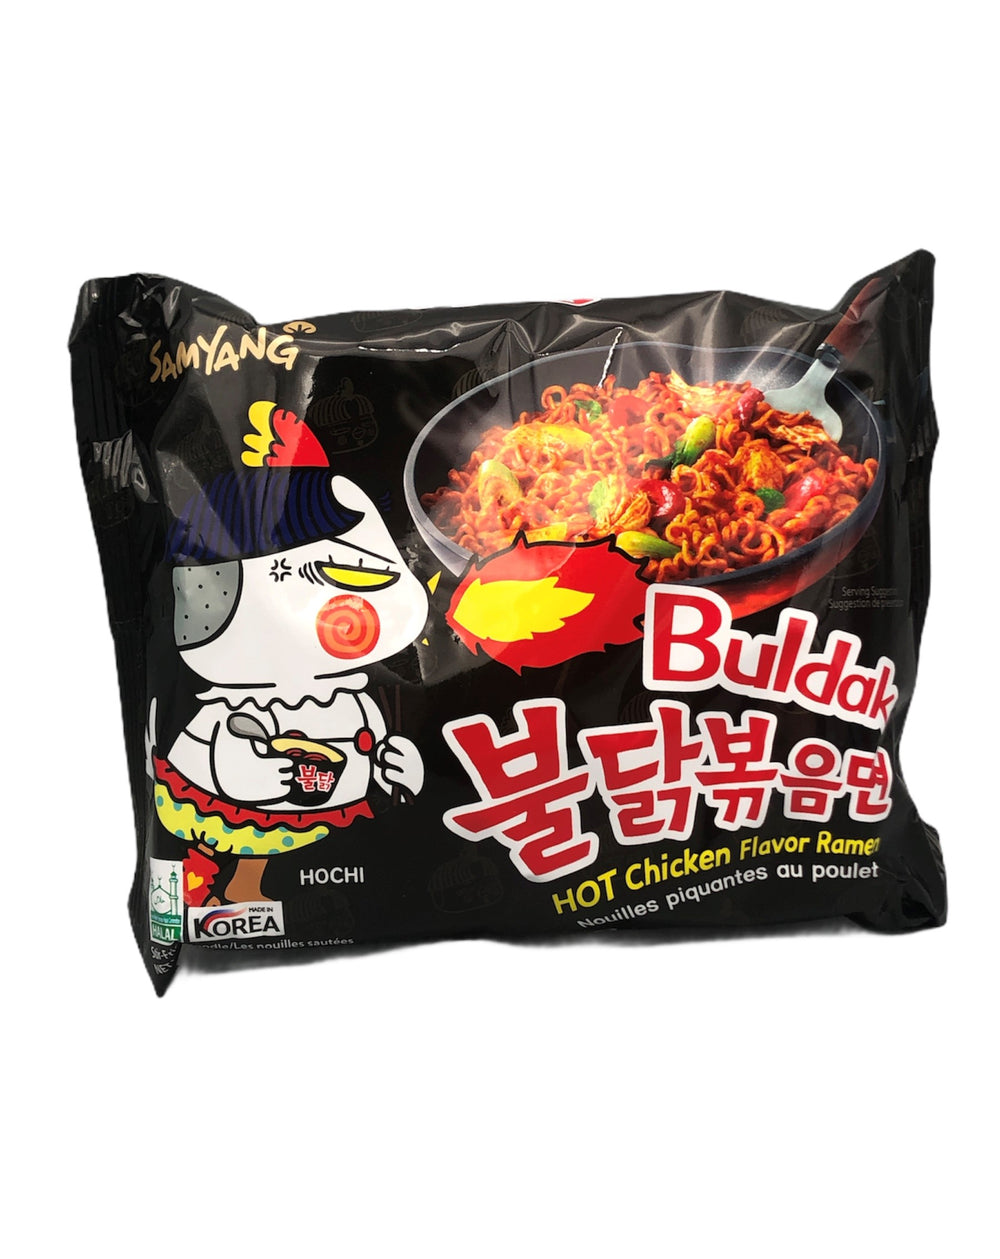 SamYang Buldak Hot Chicken (40 Stk./ VPE) - My Candytown